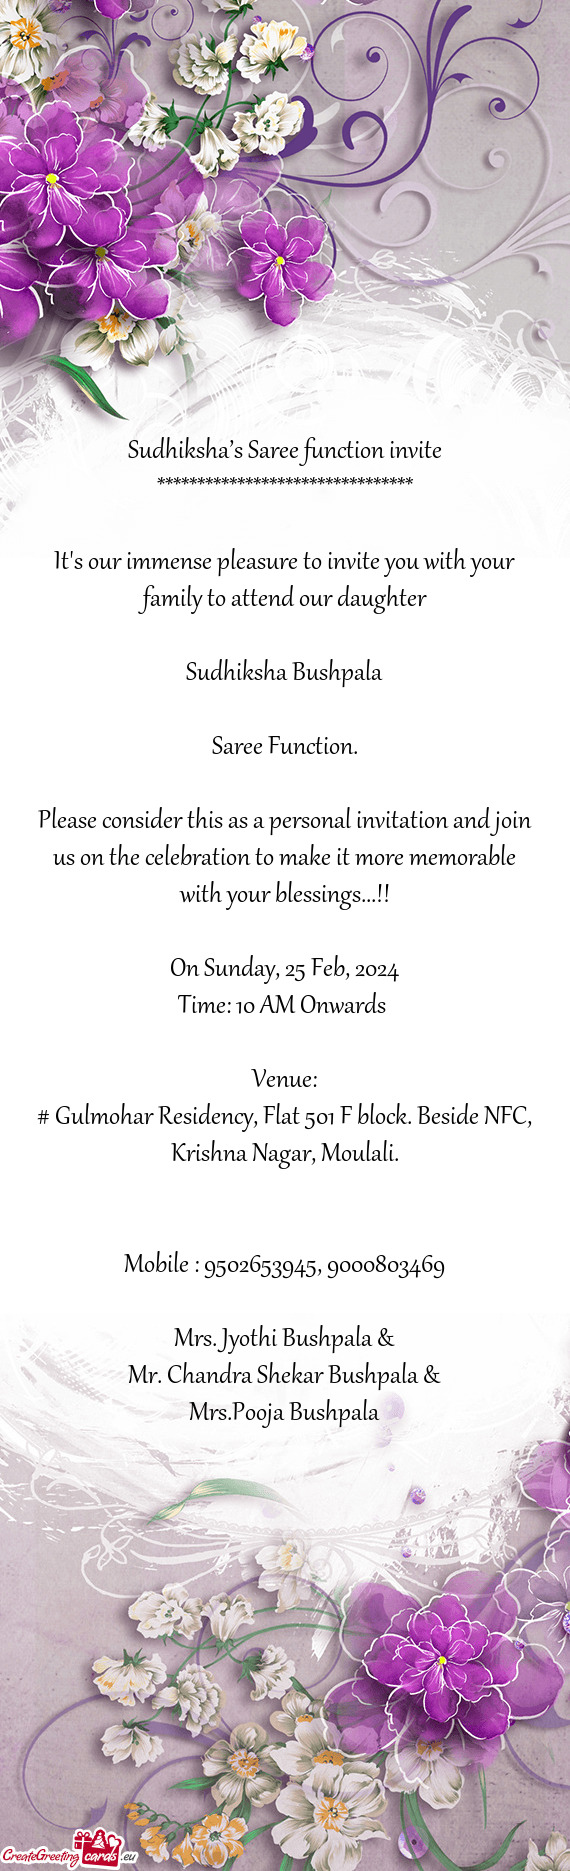 Sudhiksha’s Saree function invite